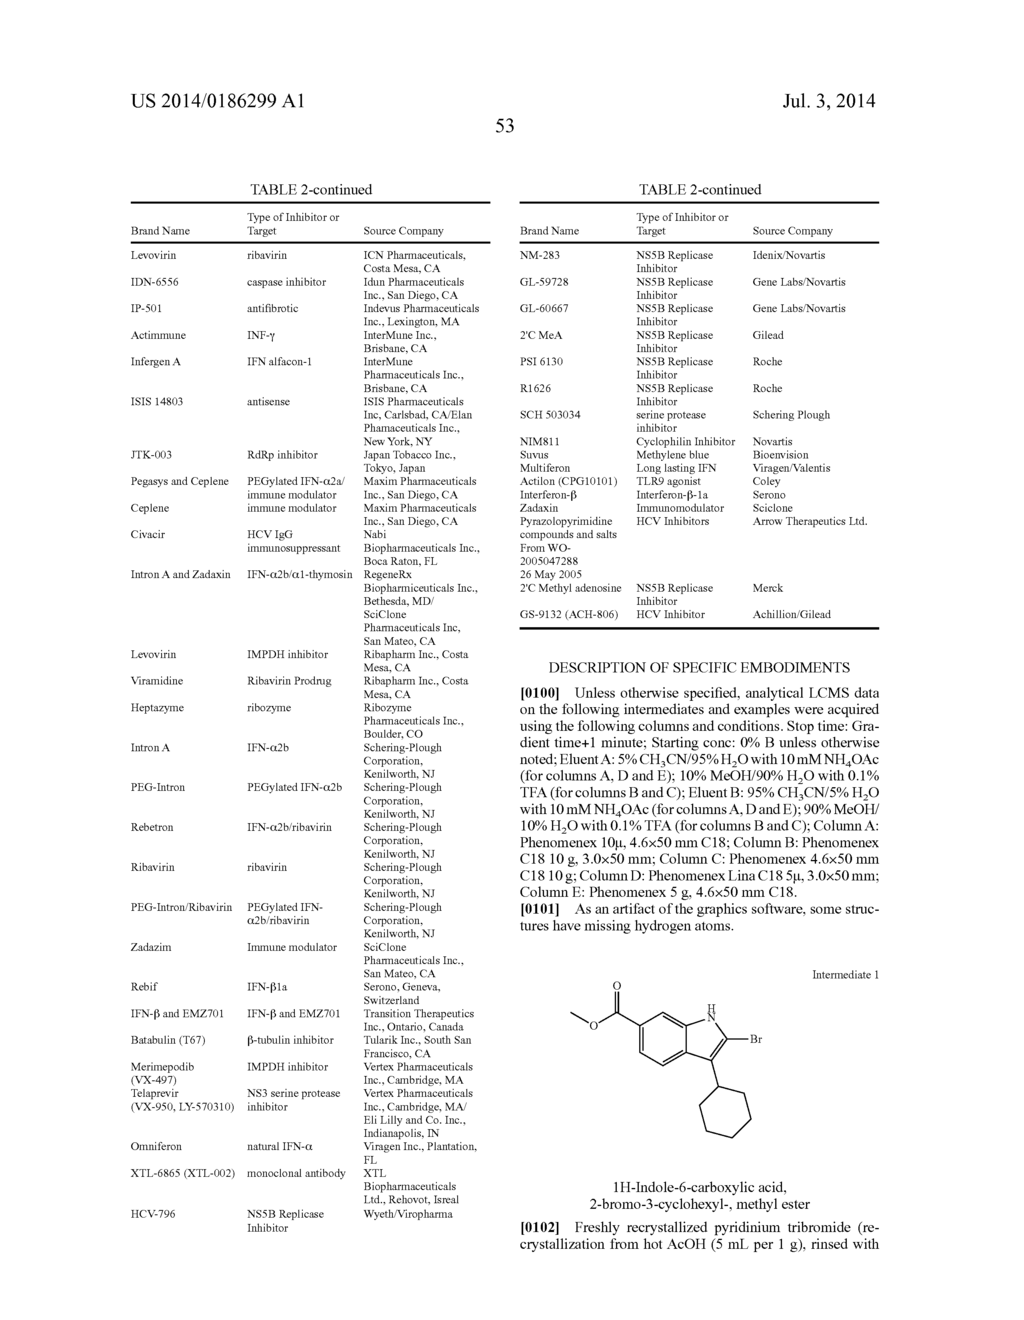 Cyclopropyl Fused Indolobenzazepine HCV NS5B Inhibitors - diagram, schematic, and image 54